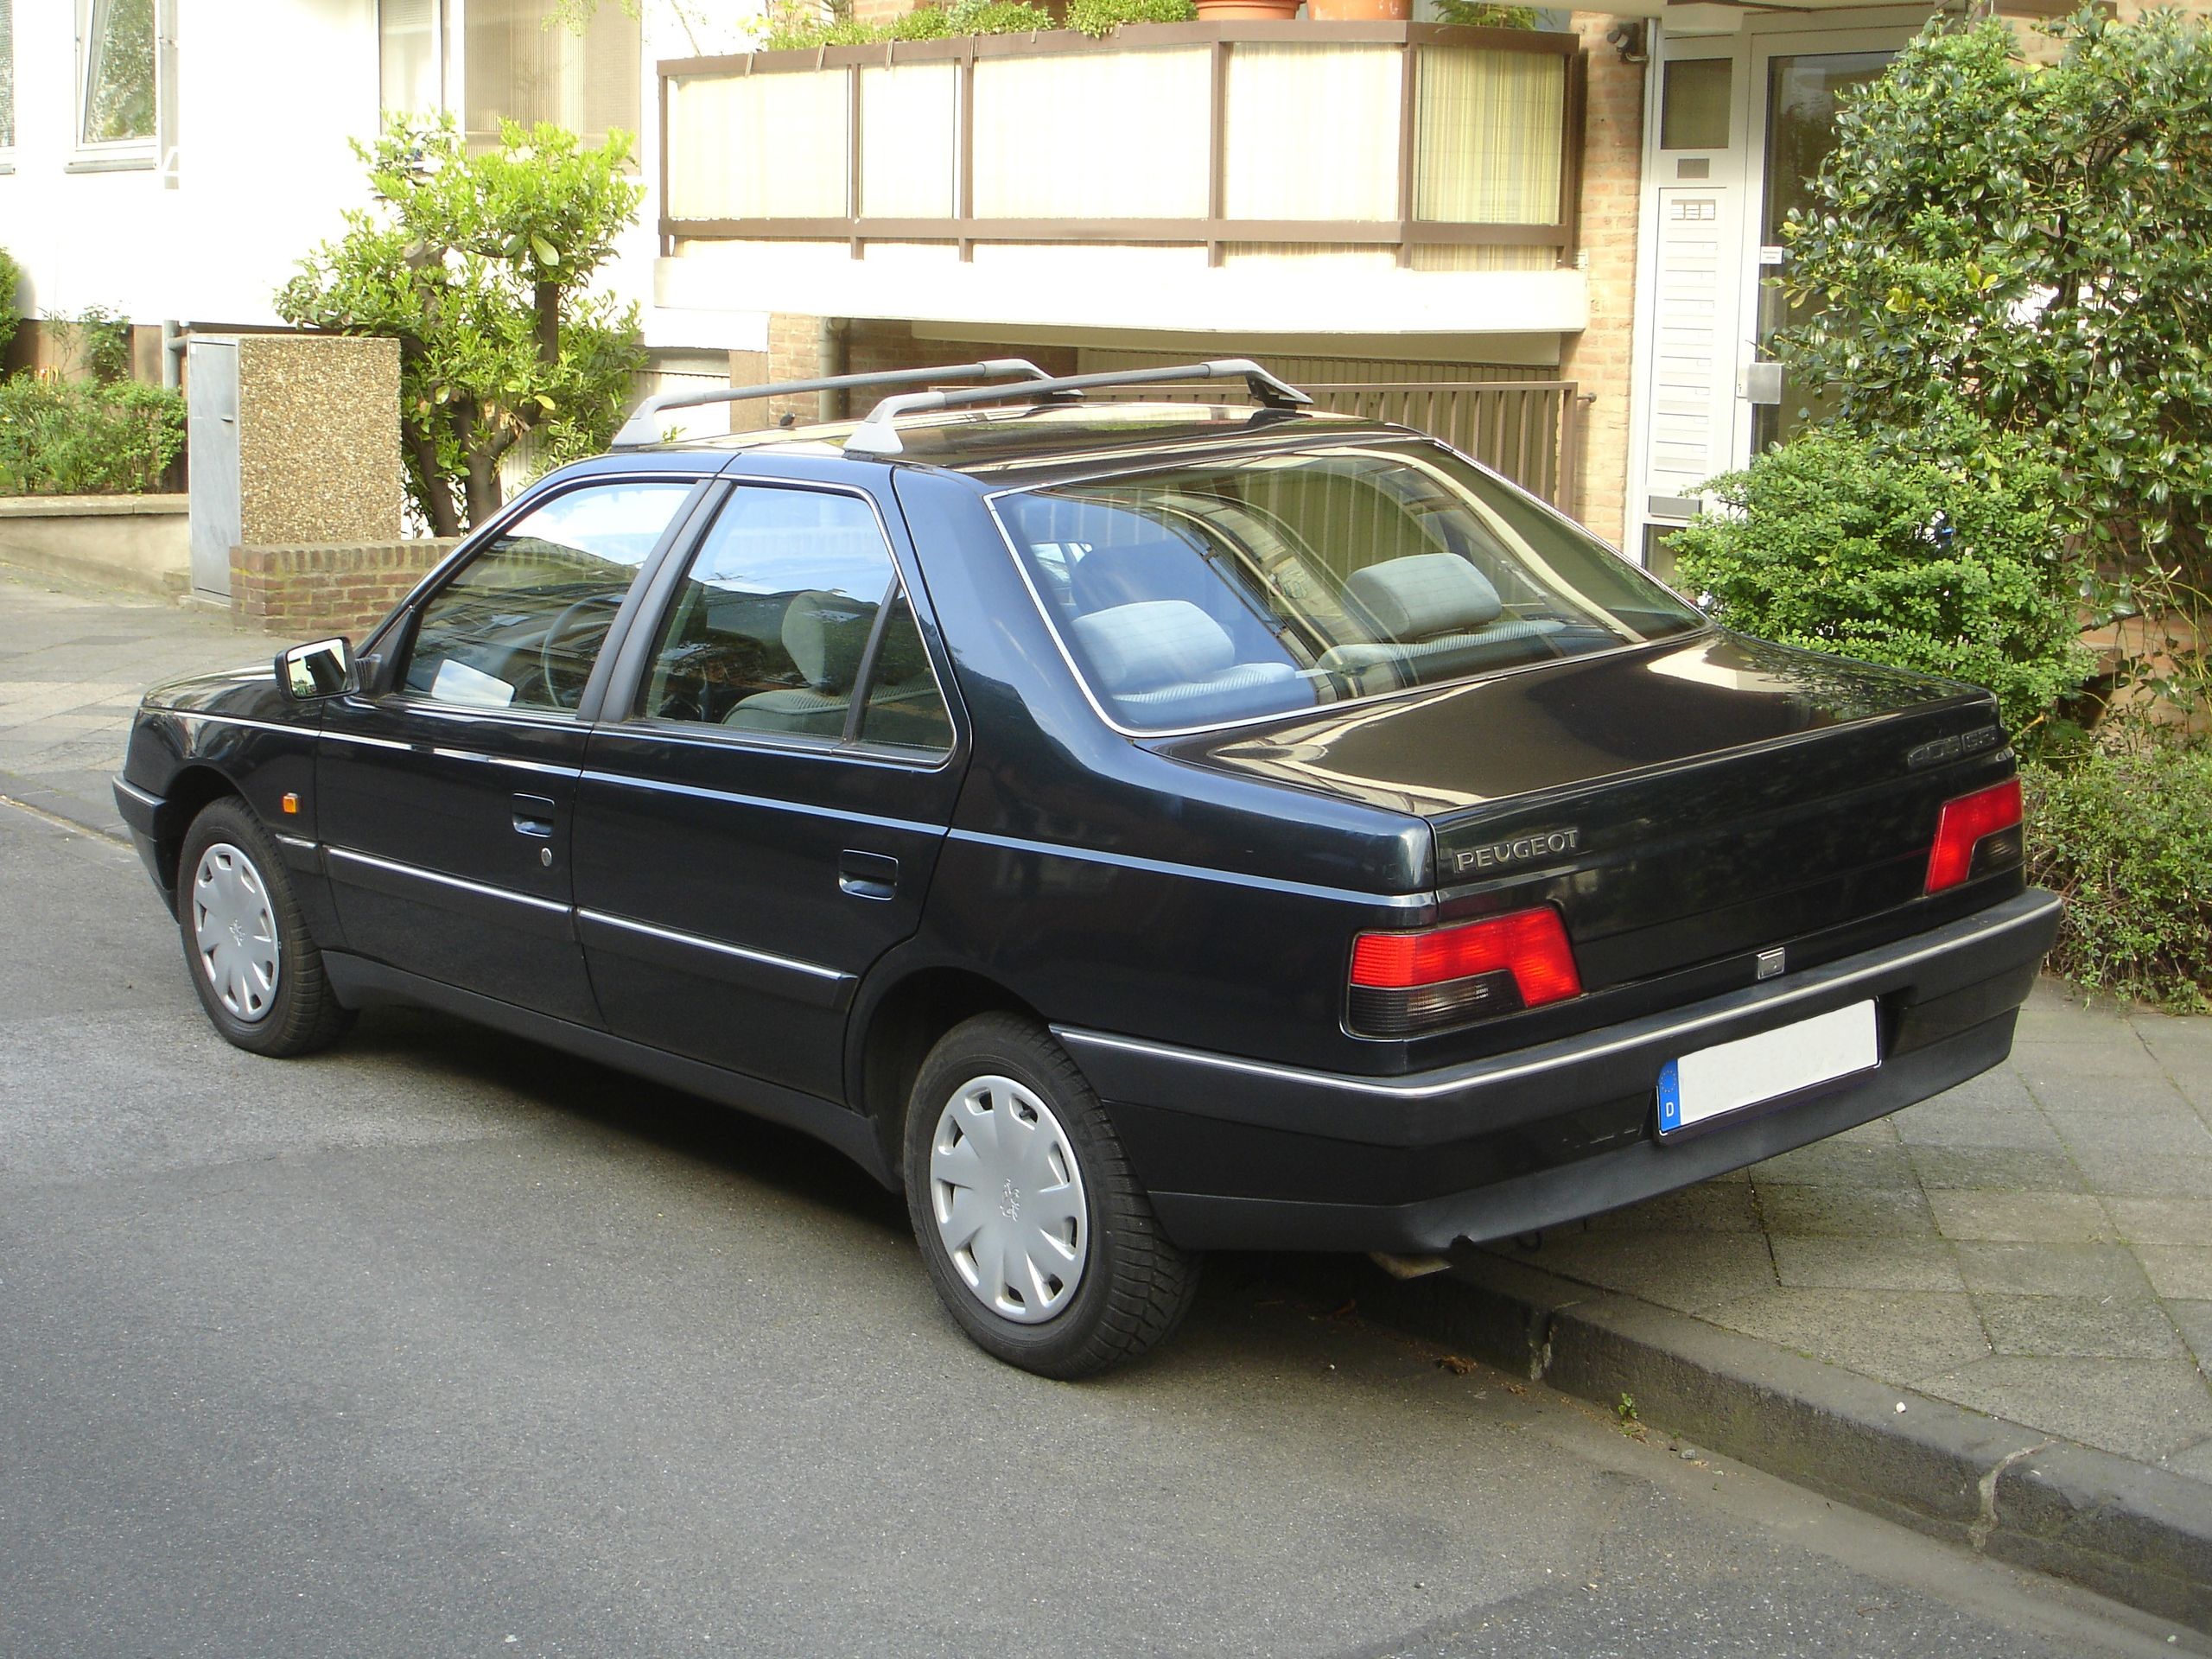 Peugeot 405 — Wikipédia